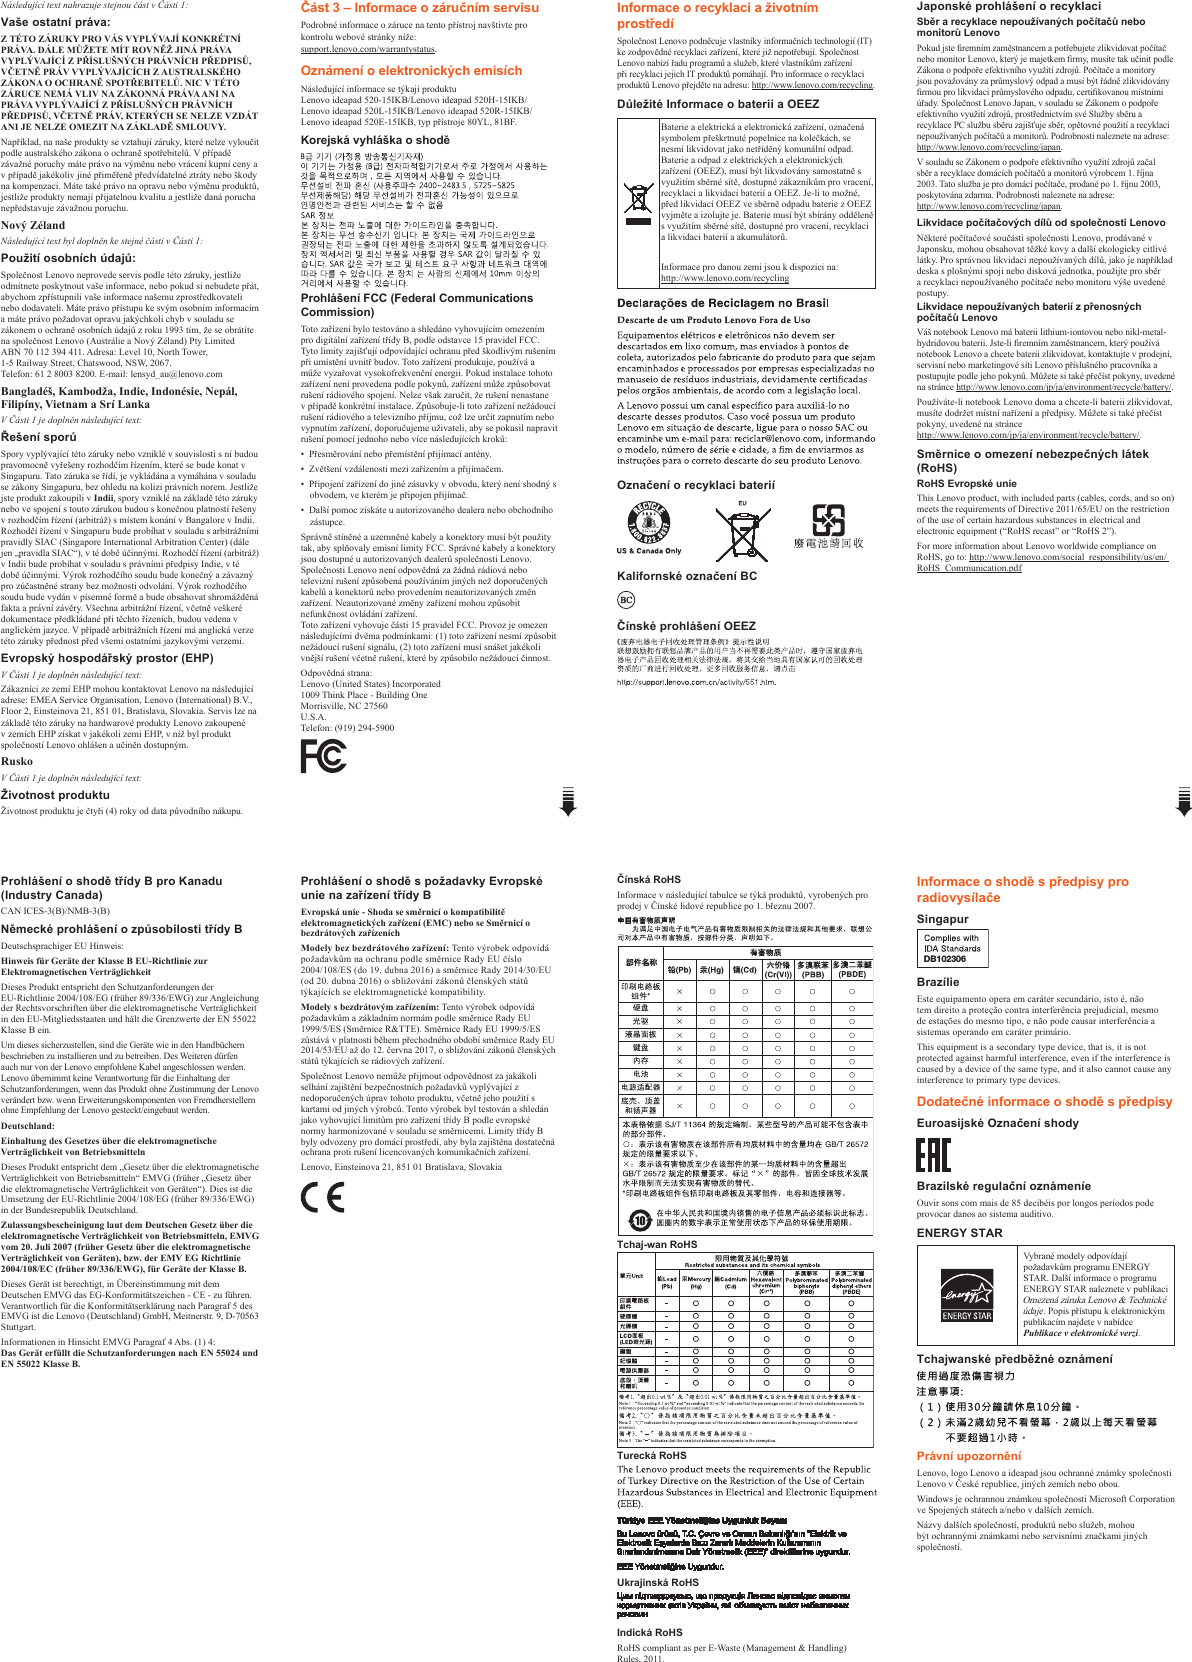 Page 2 of 2 - Lenovo Ideapad520-15Ikb 520X-15Ikb Swsg Cs 201705 Ideapad 520-15IKB CZ-02 User Manual (Czech) Safety, Warranty, And Setup Guide - (Type 80YL) Laptop (ideapad)